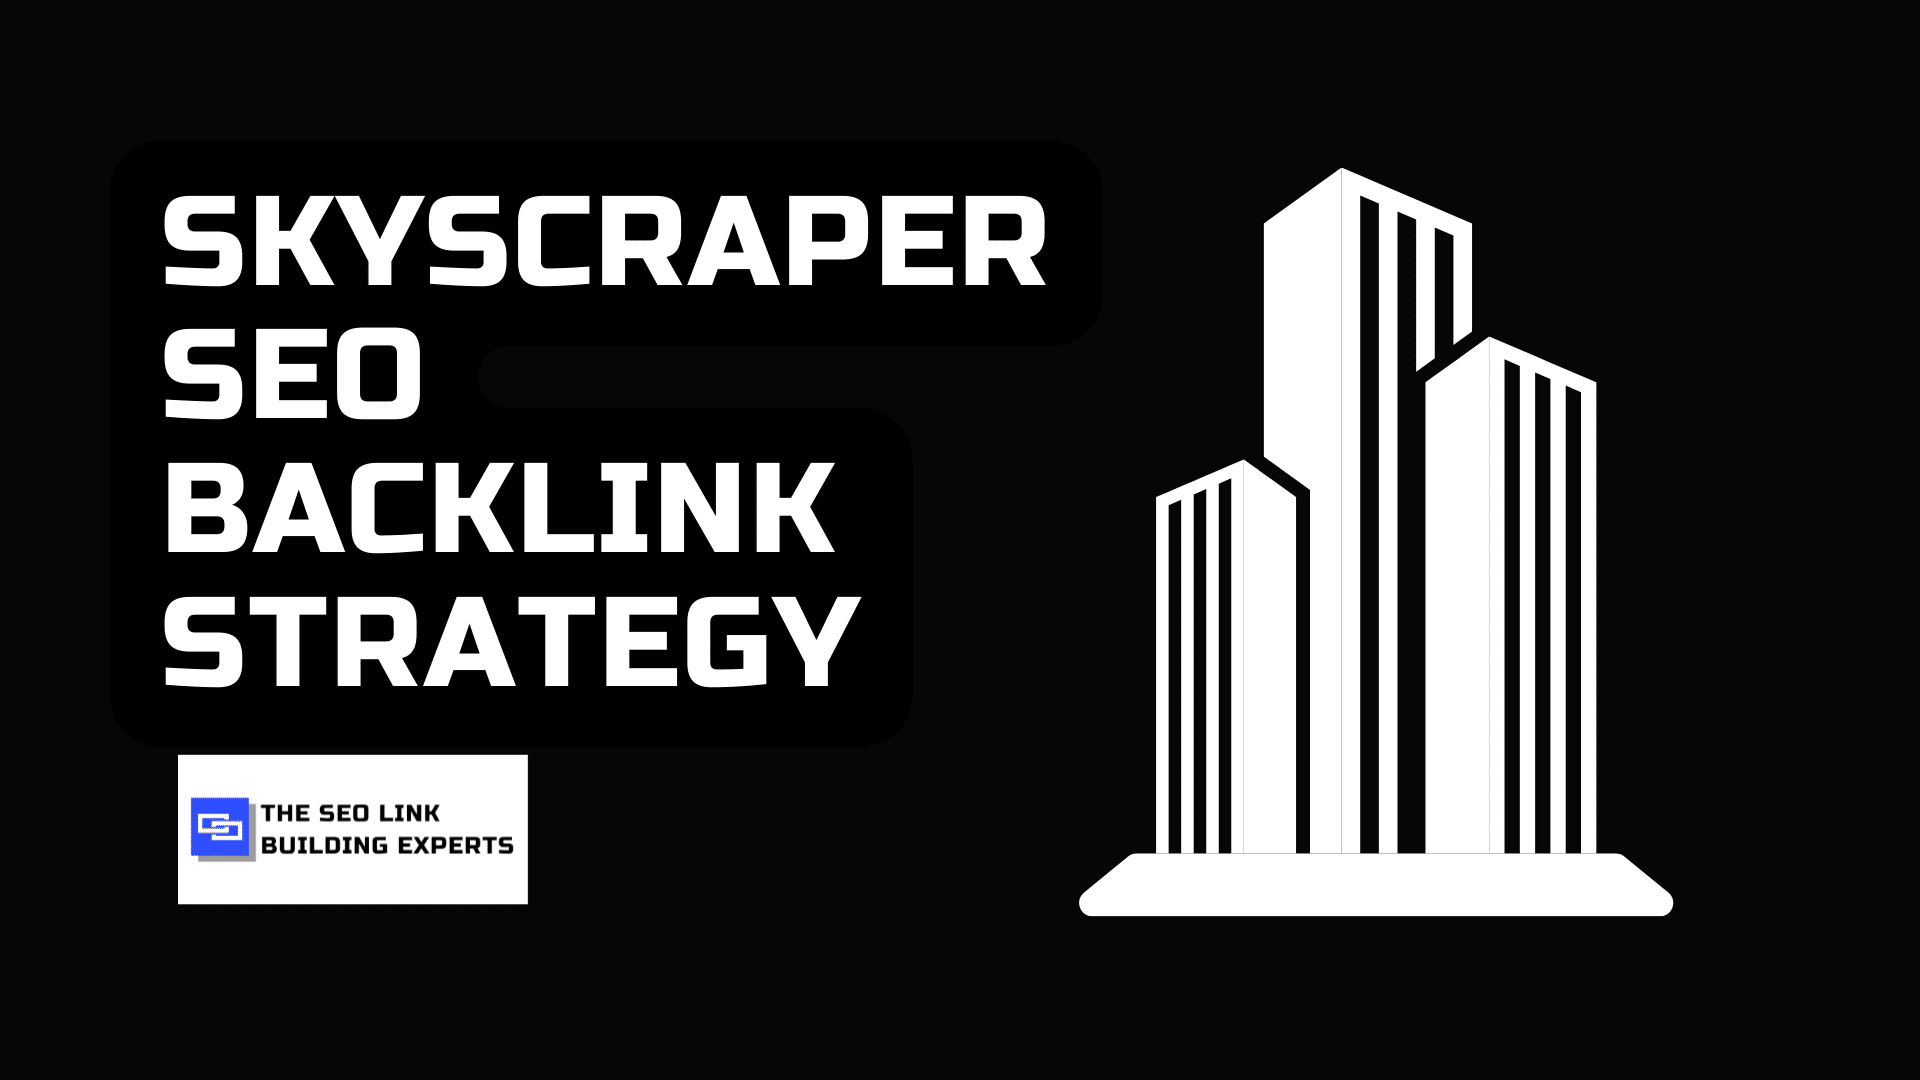 Skyscraper SEO Backlink Strategy